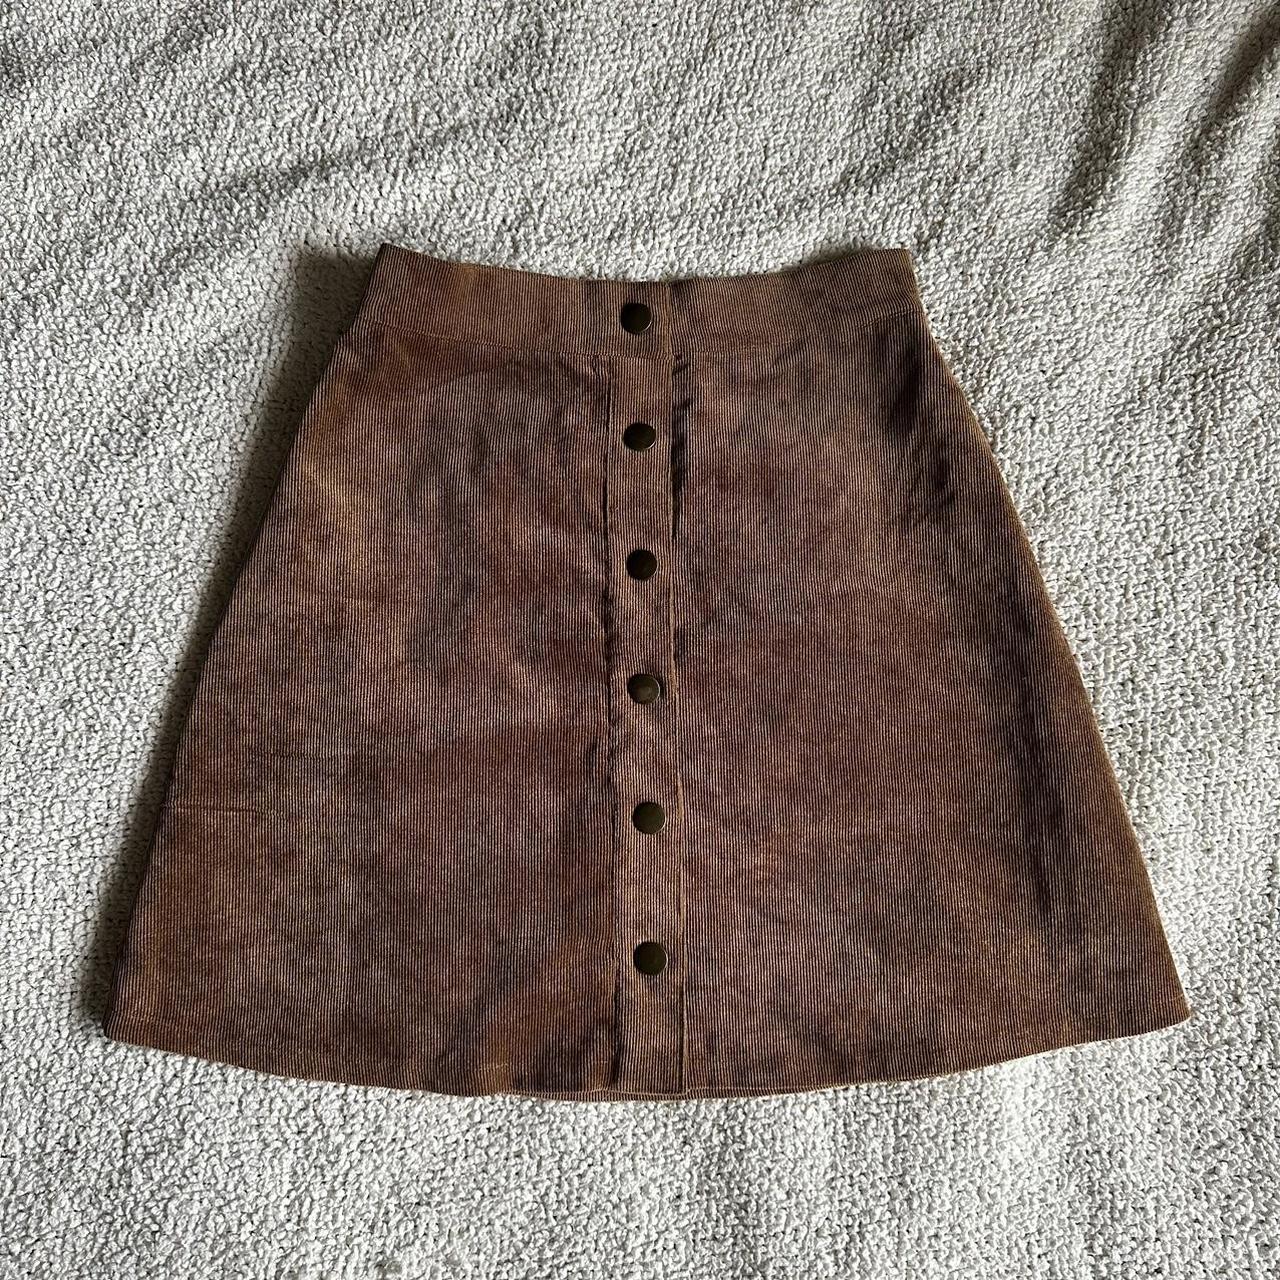 brown button up corduroy skirt ‧₊˚౨ৎ˚₊ ‧₊ •brand:... - Depop